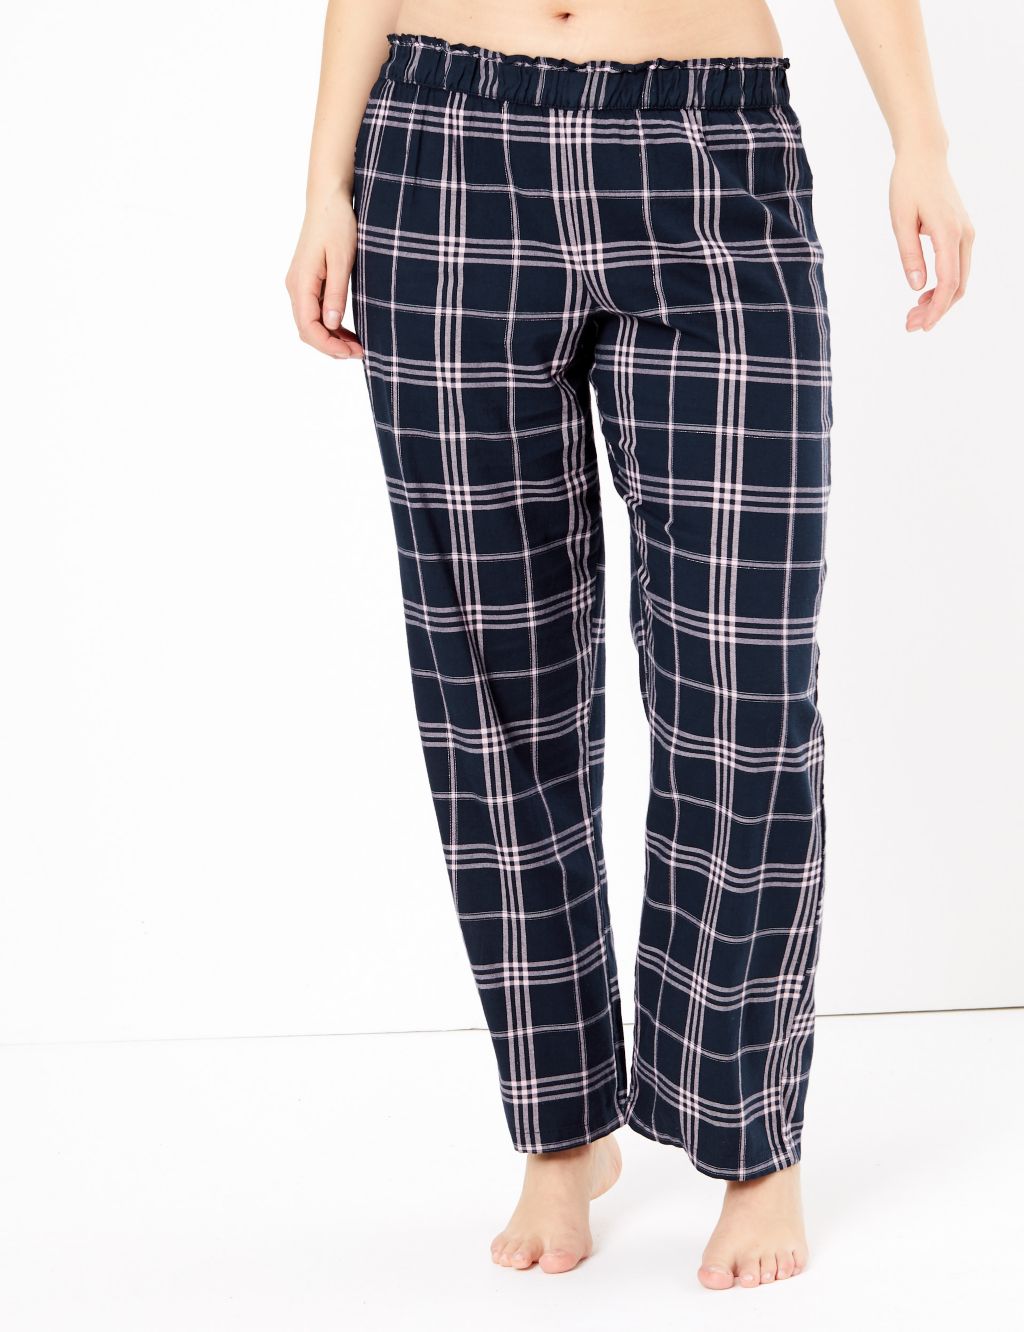 Checked Pyjama Set | M&S Collection | M&S